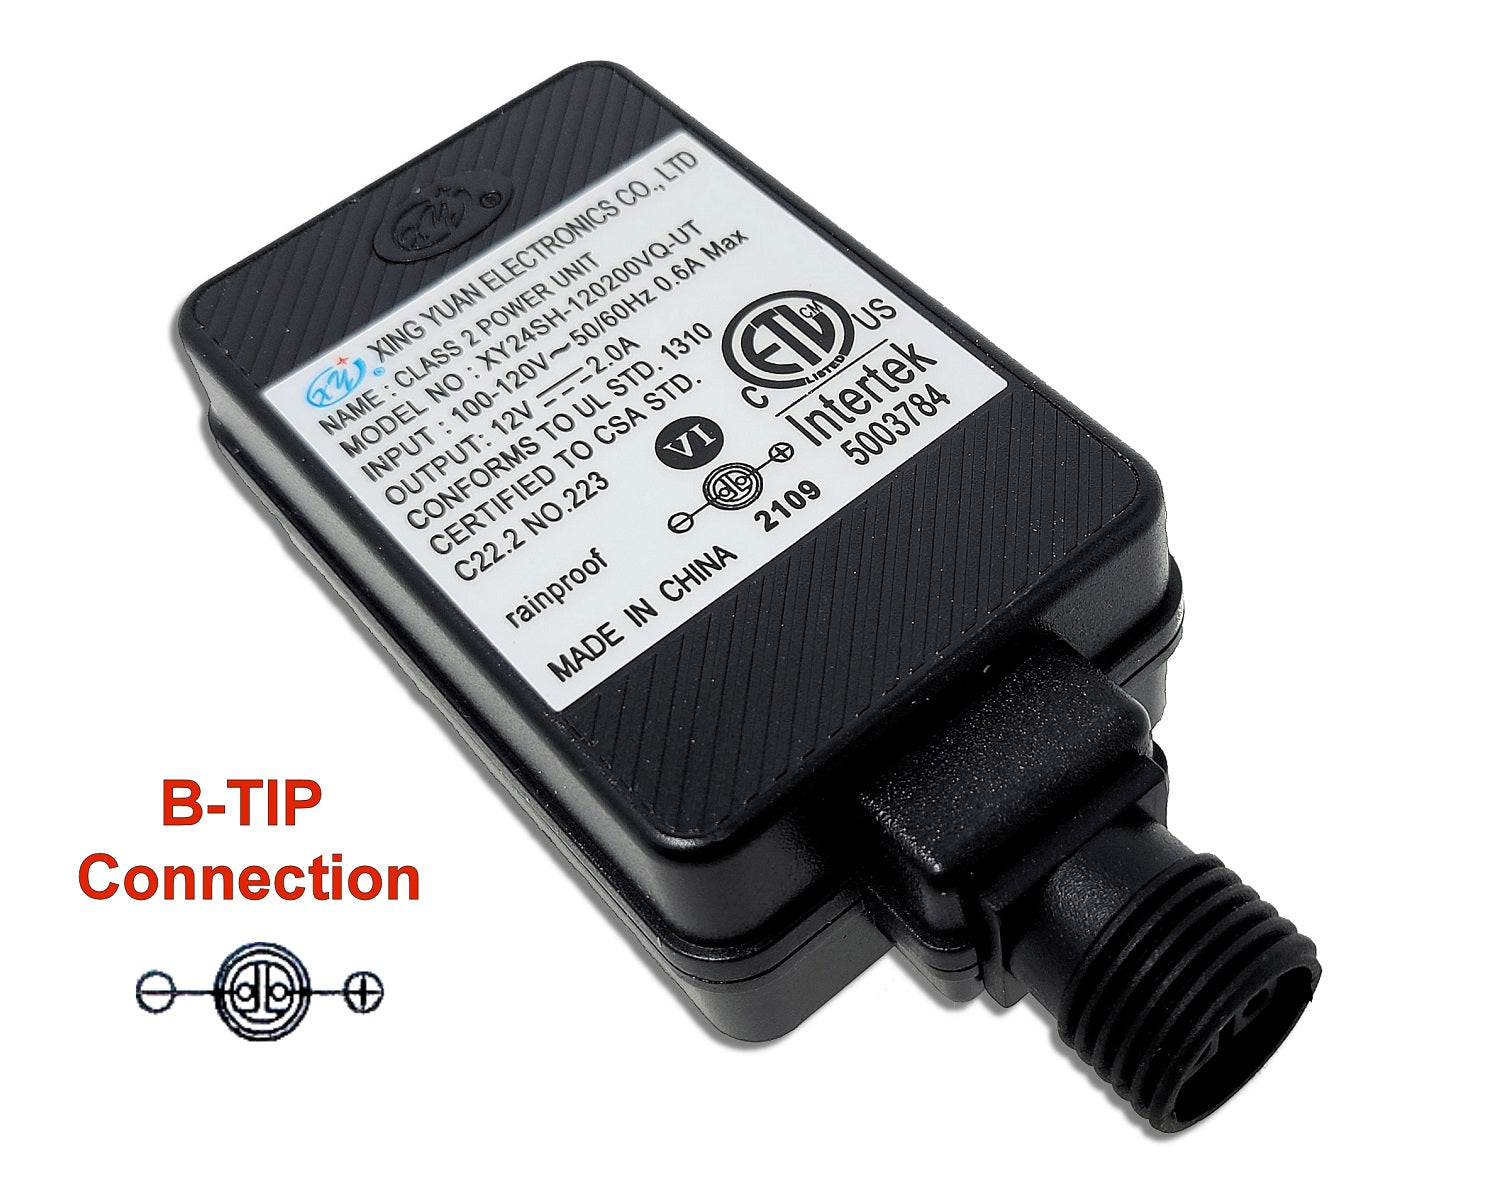 Xing Yuan 12v 2A Power Adapter Connection TIP B | INTERTEK 5003784 